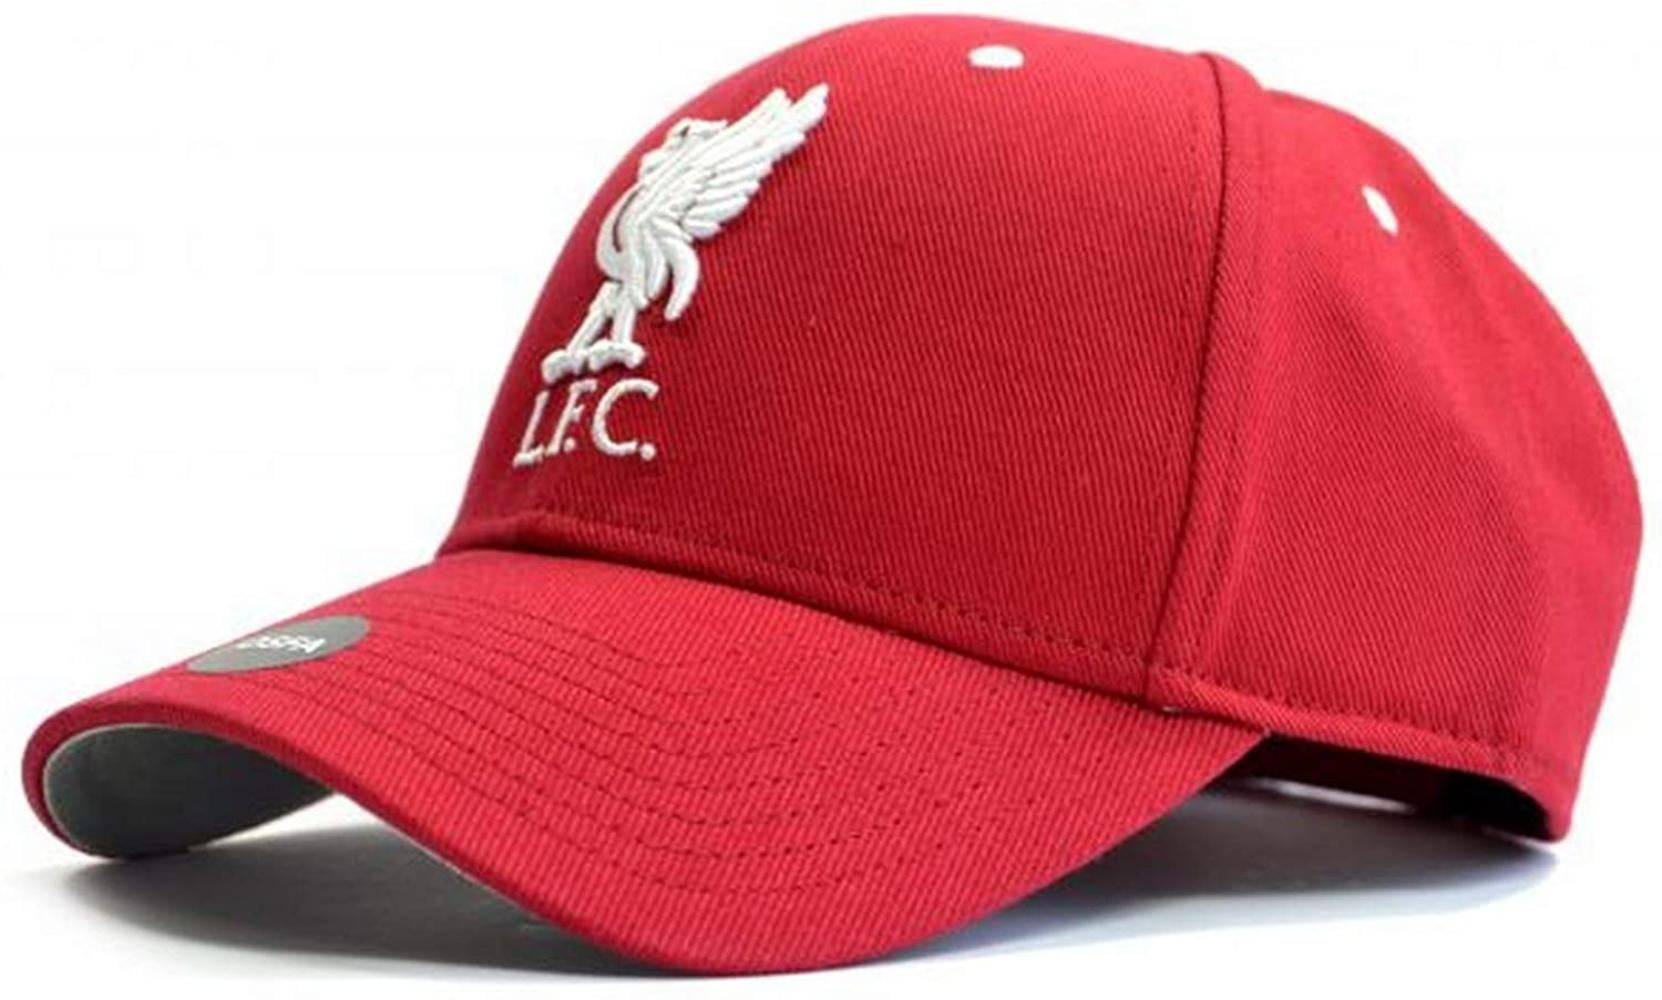 Liverpool FC Red Crest Cap Authentic EPL Merchandise 